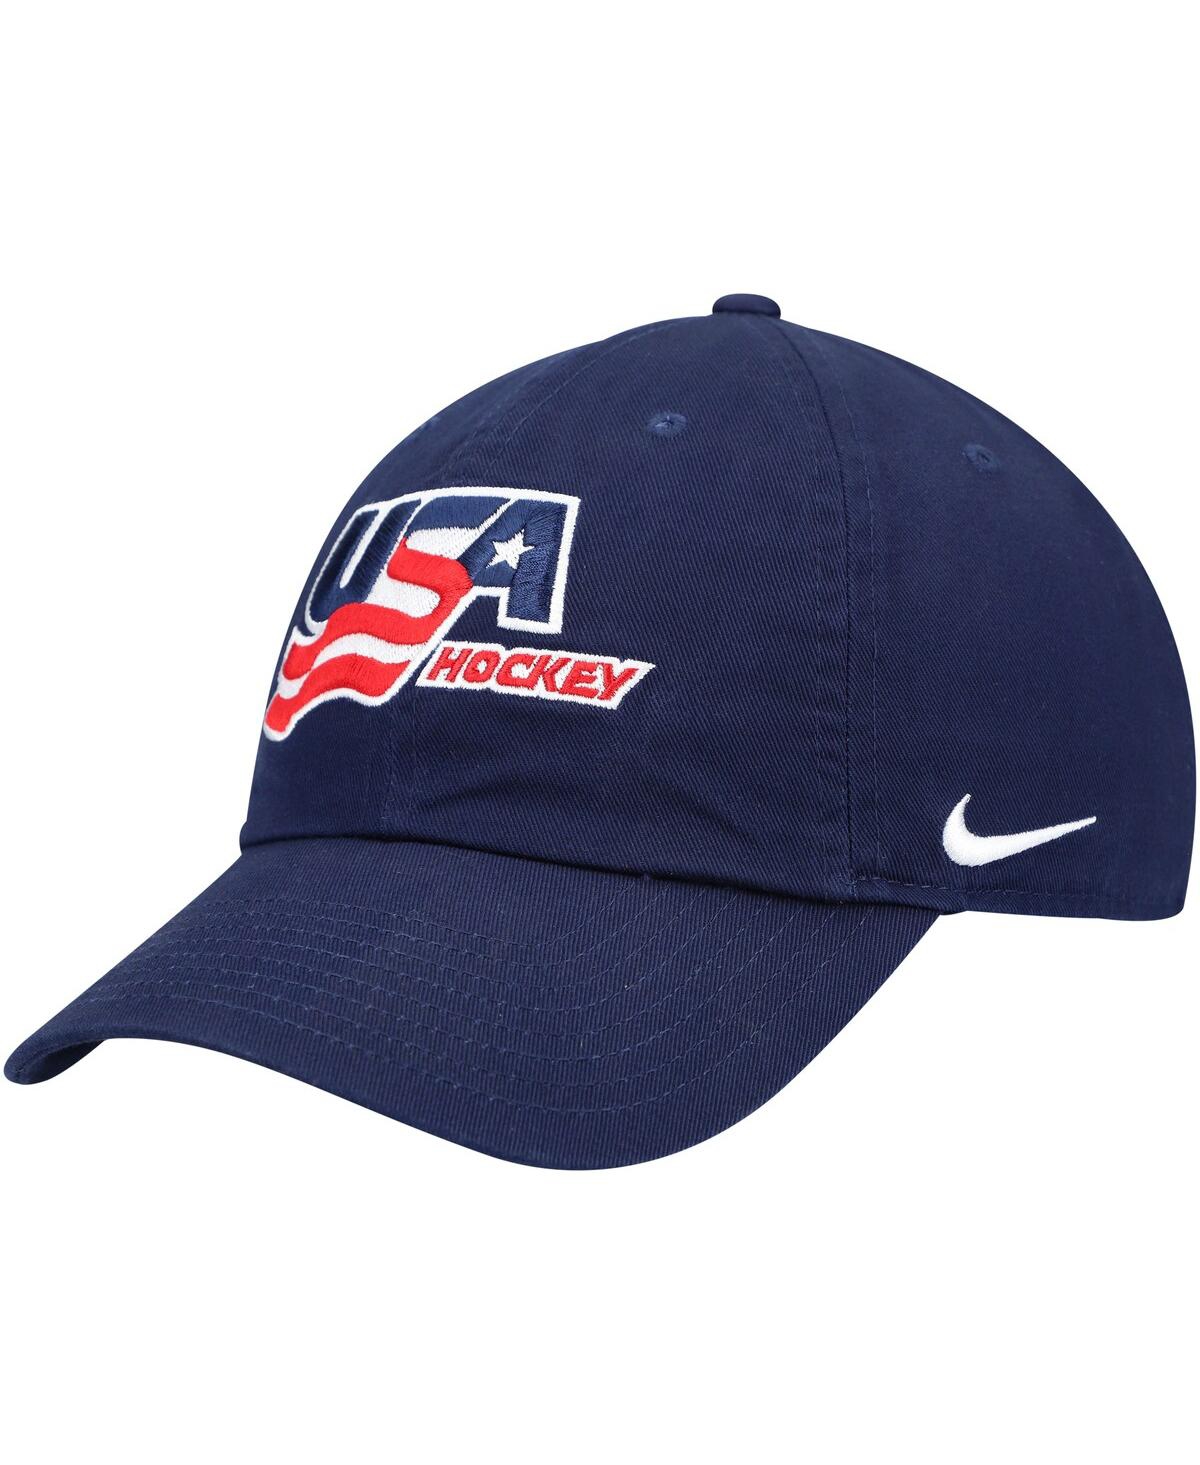 Nike Women's  Navy Usa Hockey Campus Adjustable Hat